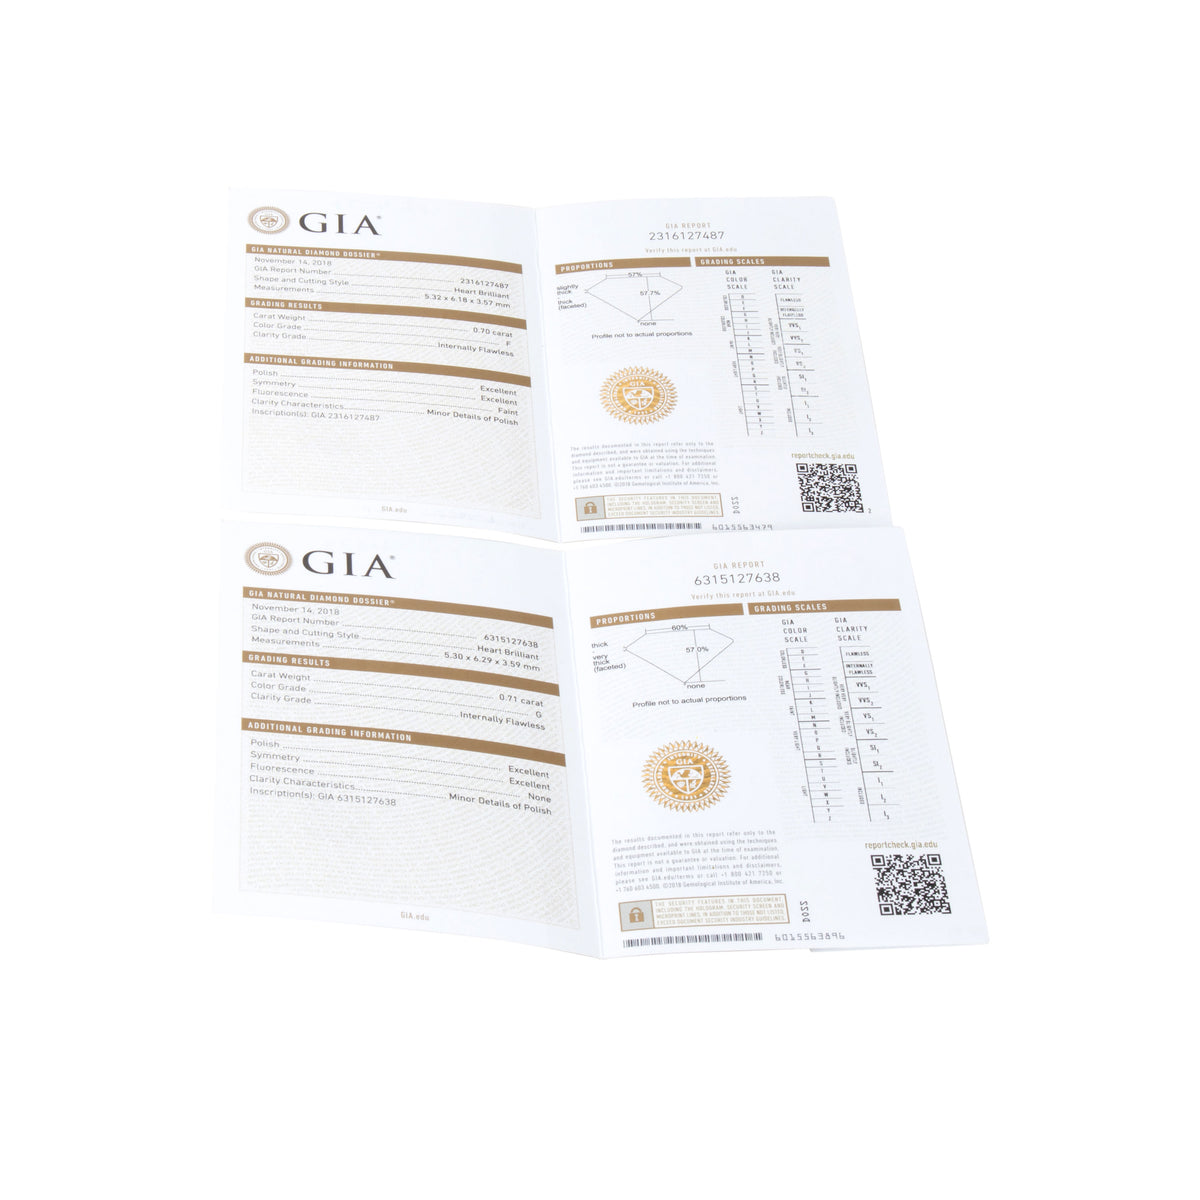 GIA Certified Heart Shape Diamond Stud Earring in 18K White Gold F-G IF 1.62 CTW